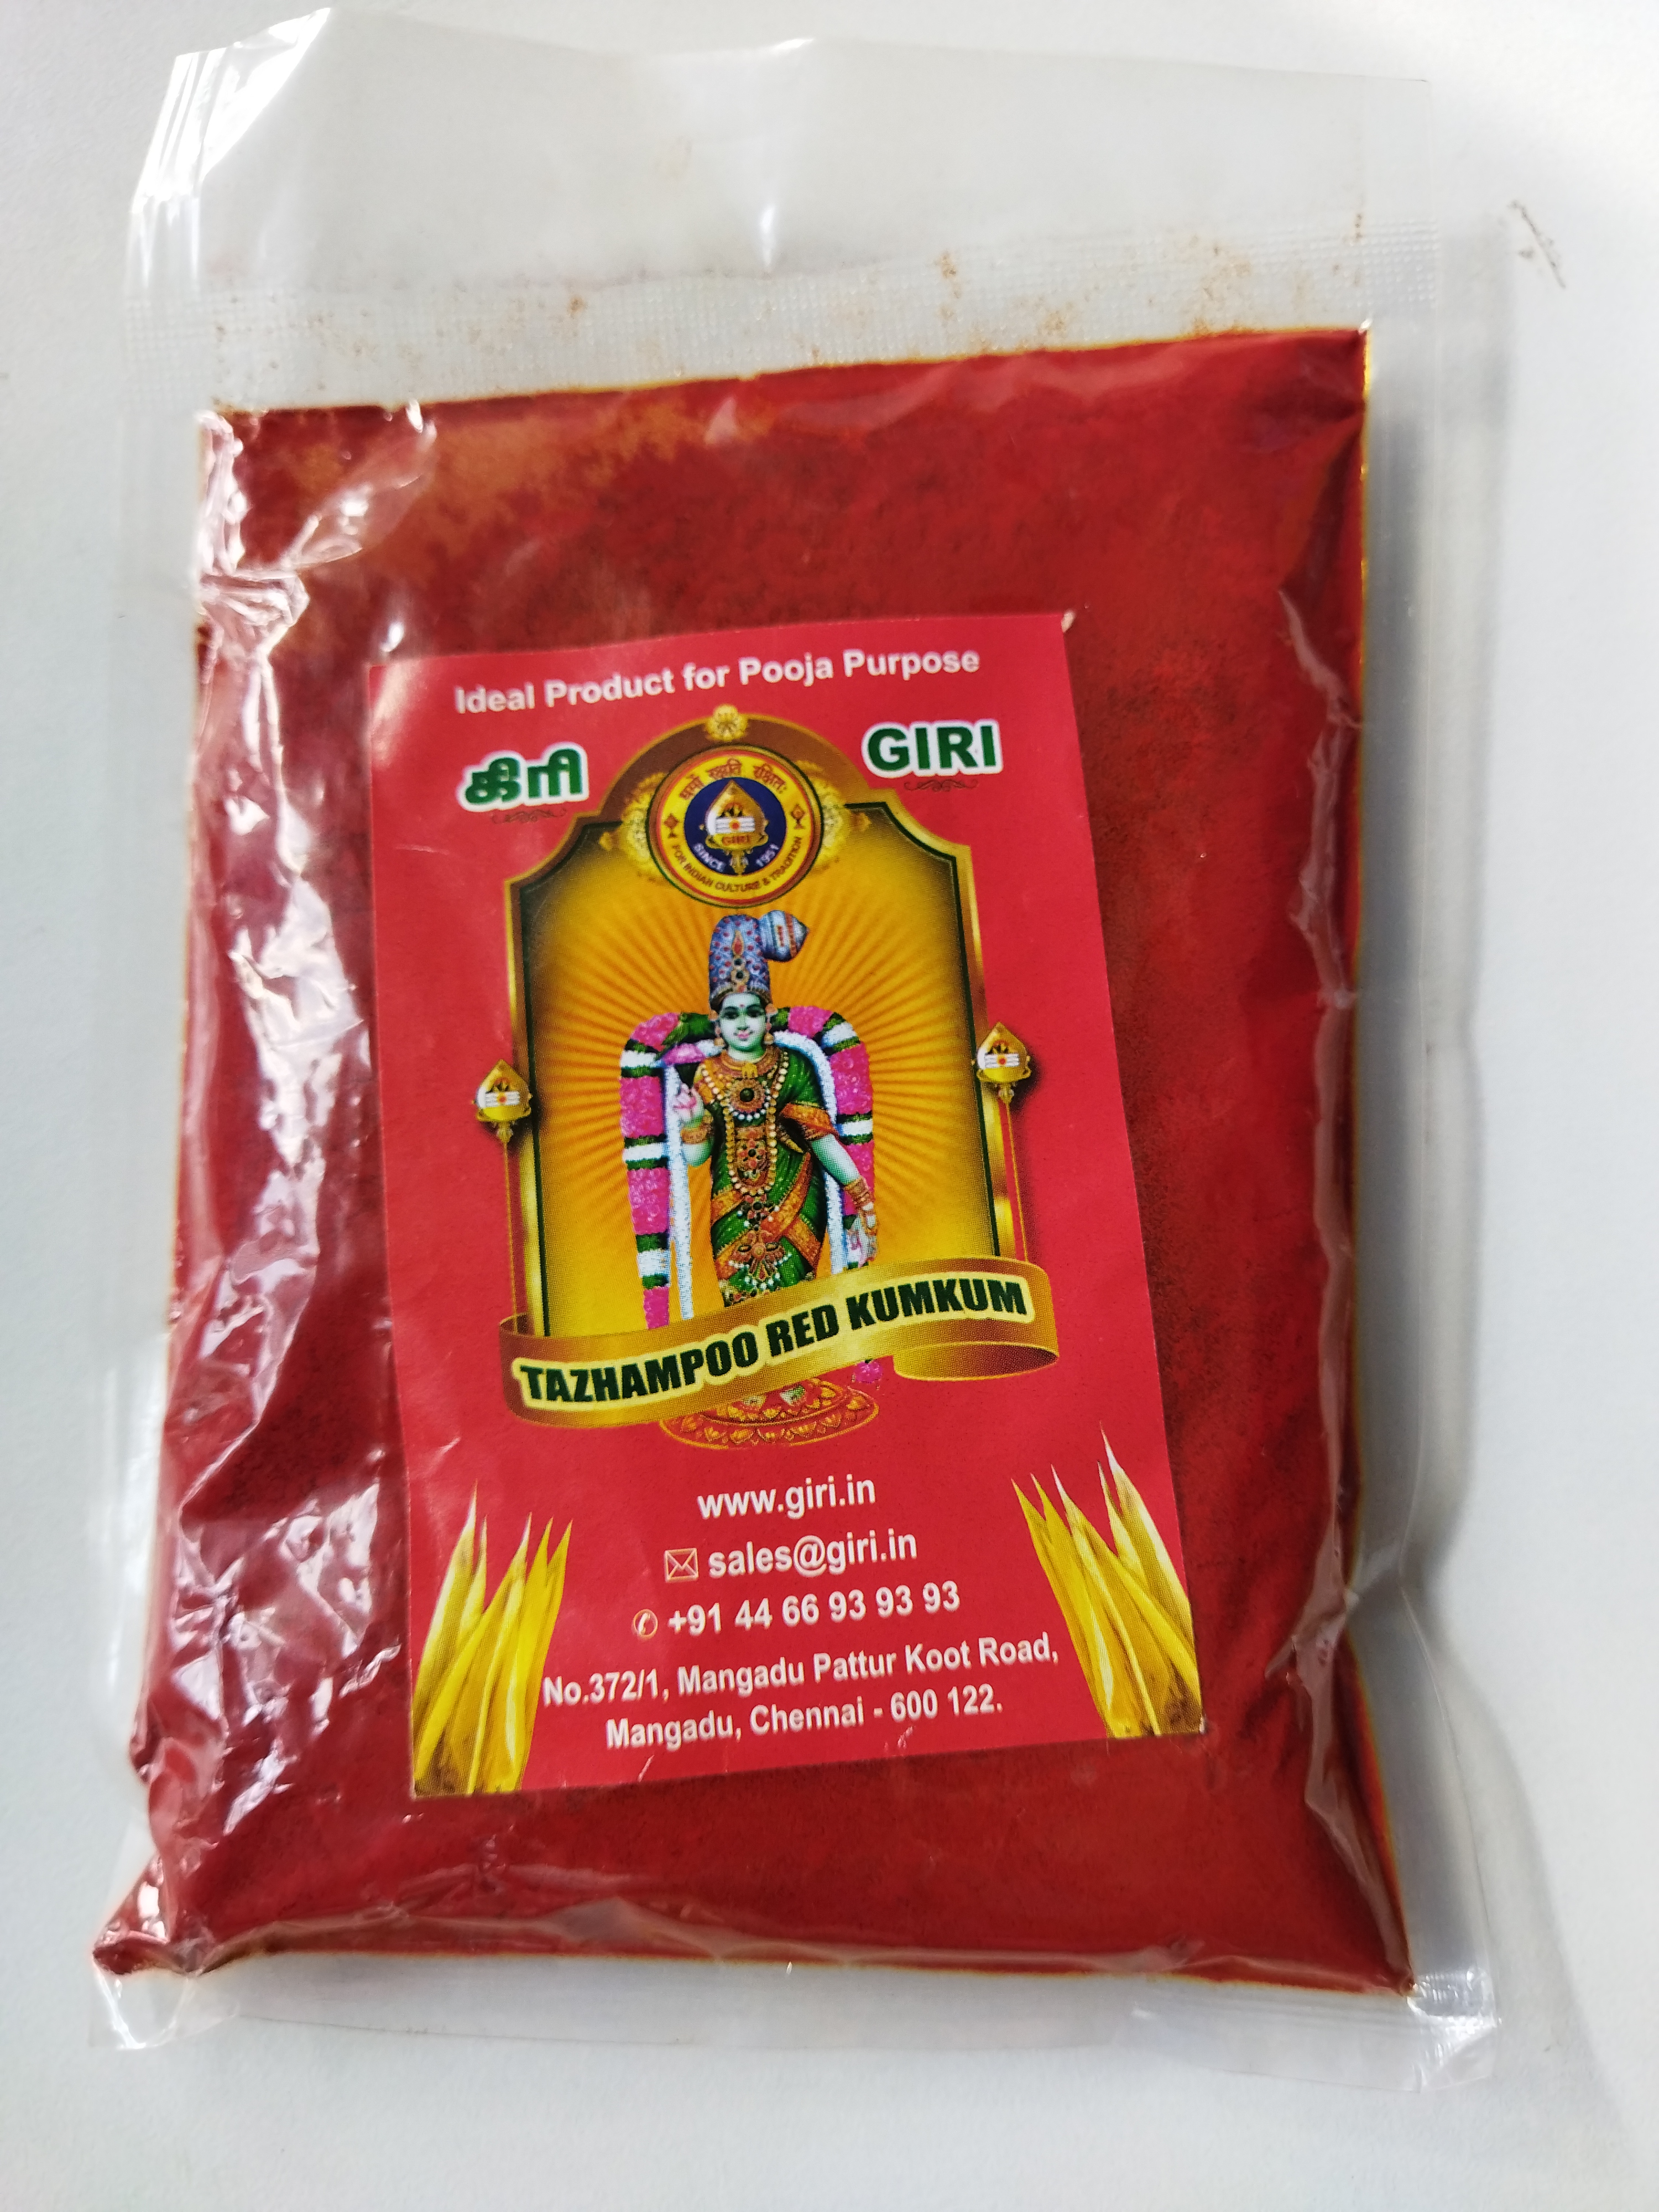 Sri Meenakshi thazhampoo red kumkum 100 gms